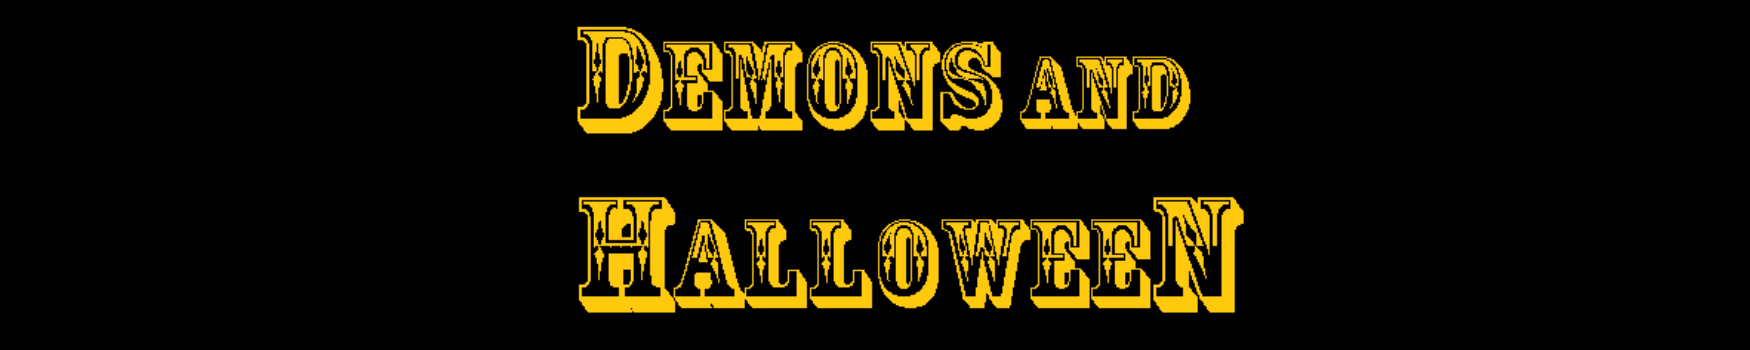 Demons And Halloween